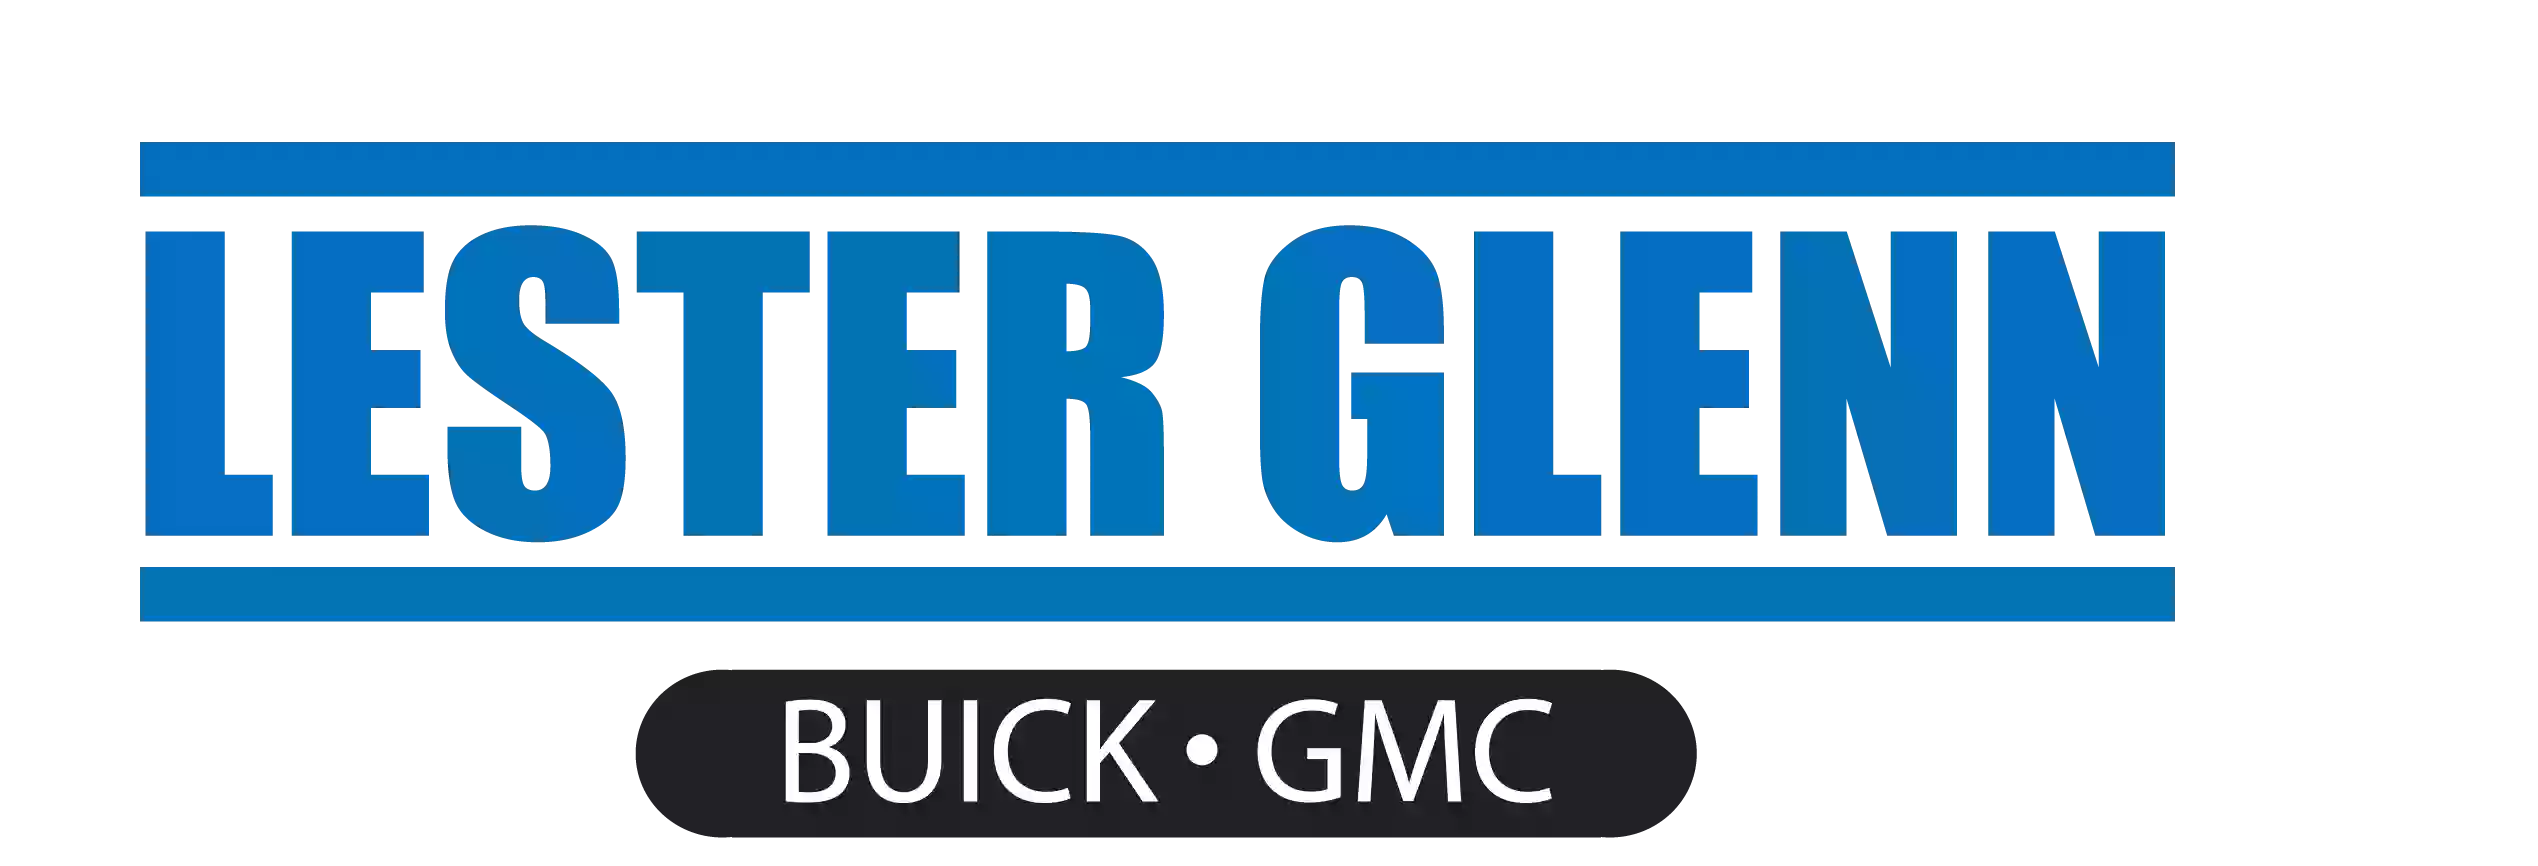 Lester Glenn Buick GMC Service Department